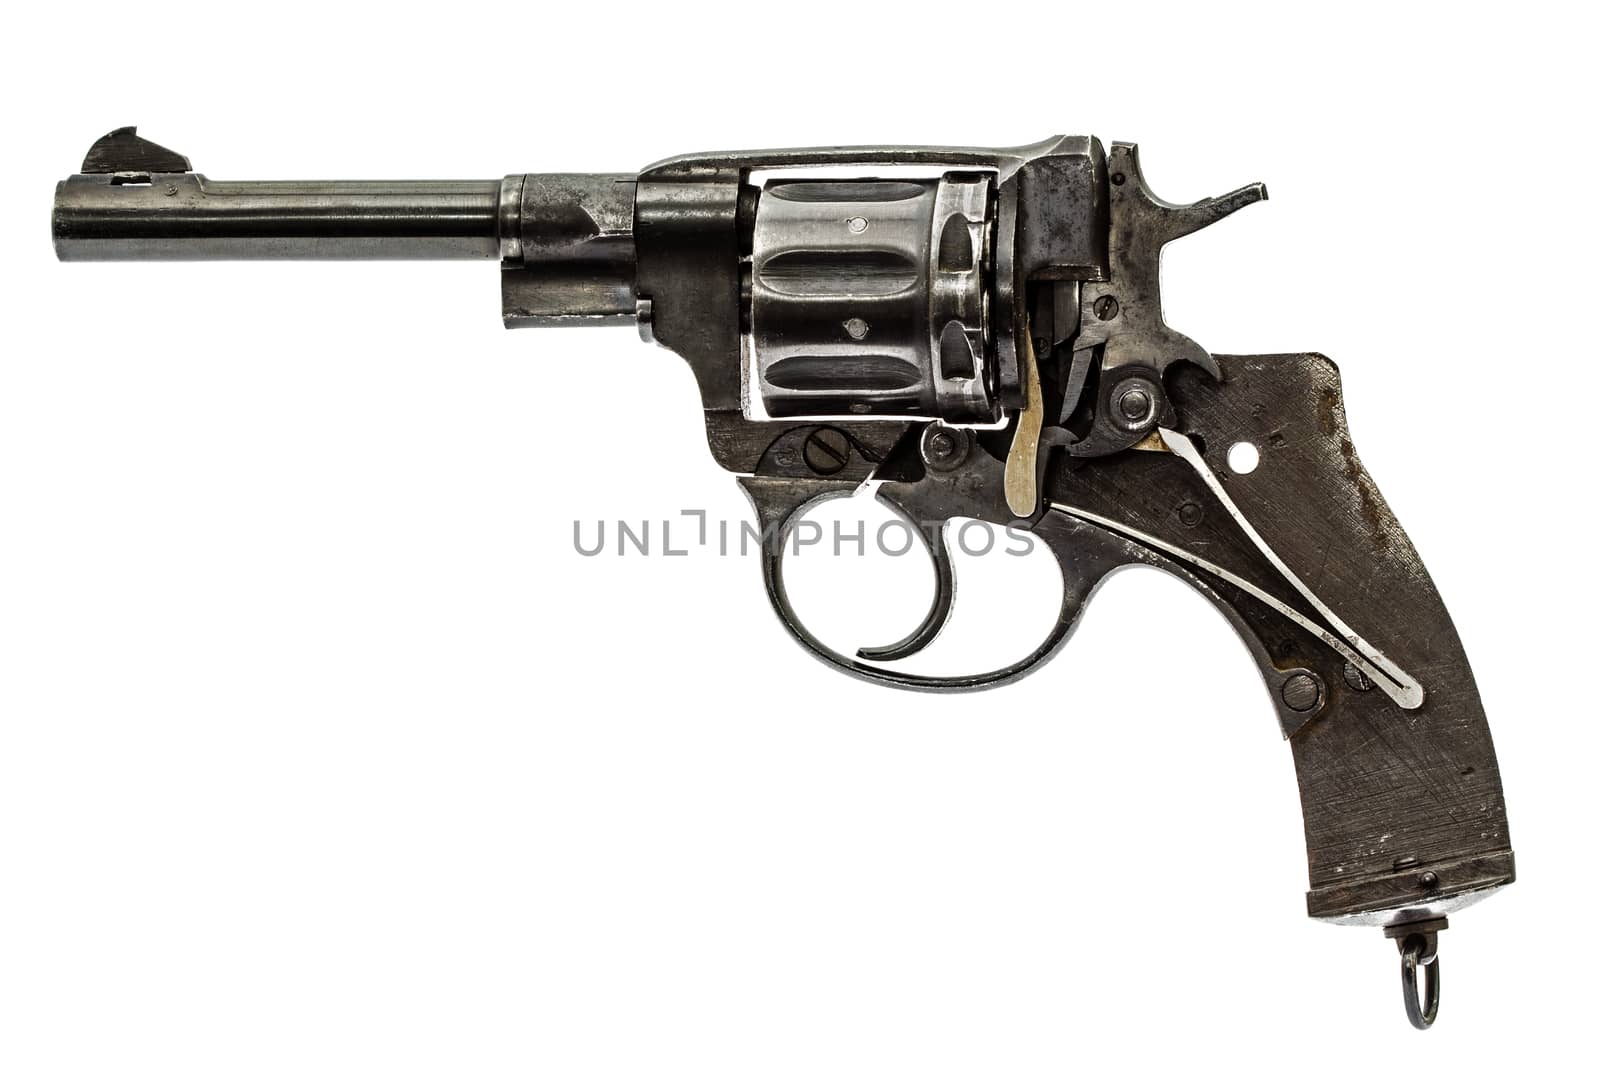 Disassembled revolver, pistol mechanism, isolated on white backg by kostiuchenko